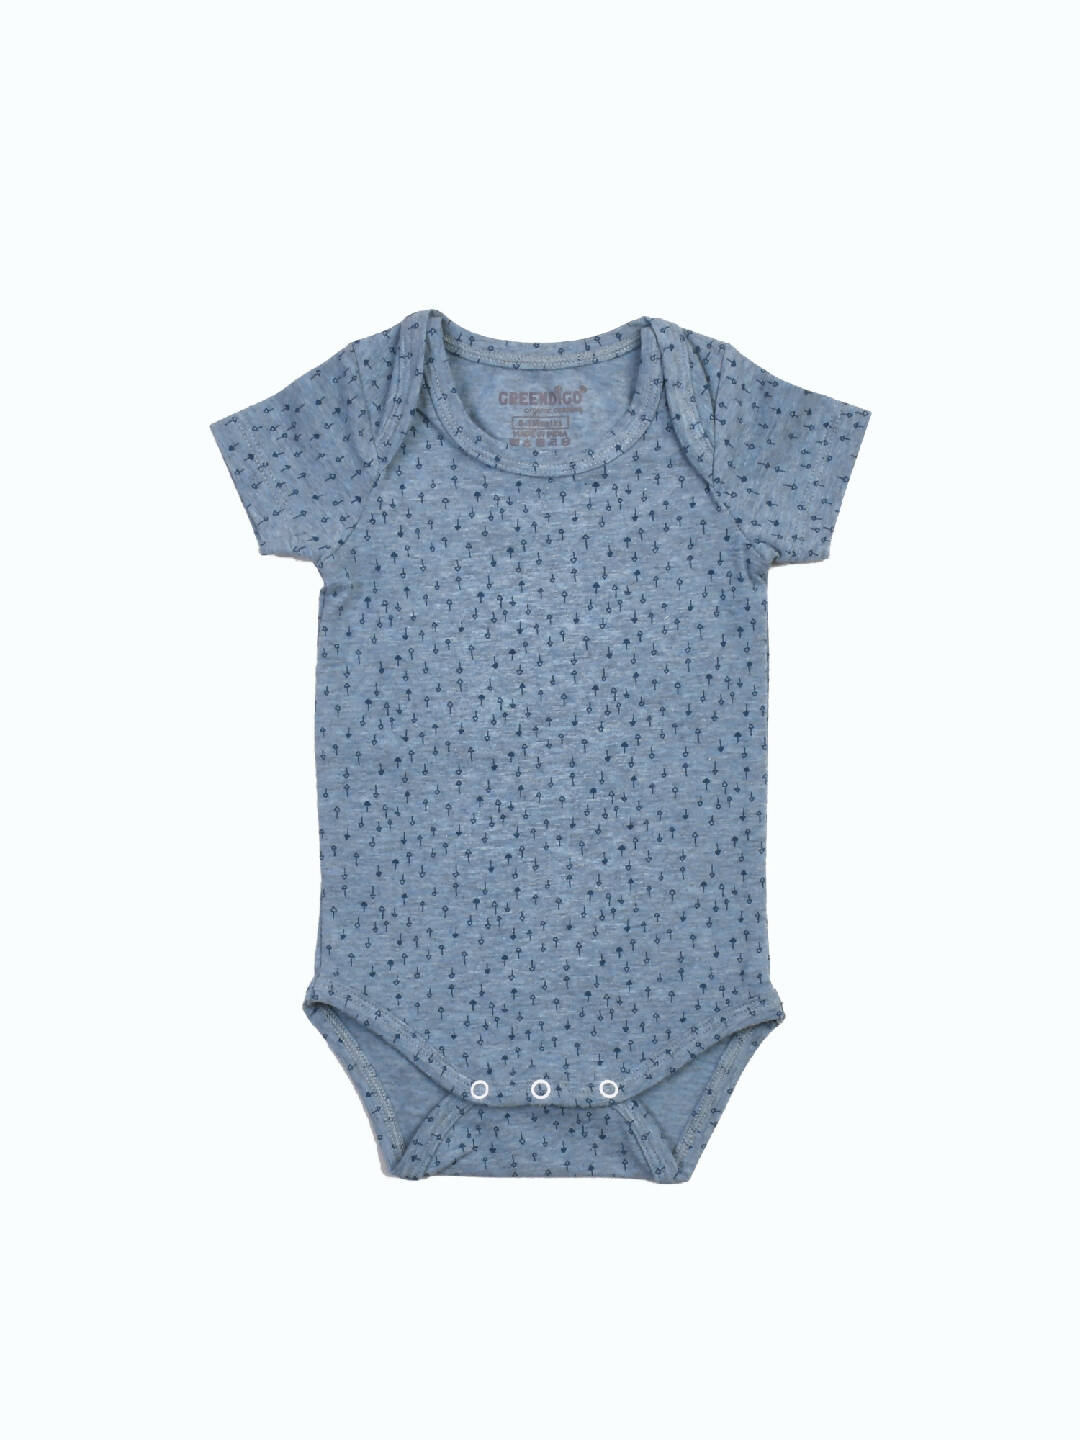 Greendigo Organic Cotton infant bodysuit for new born baby boys and baby girls